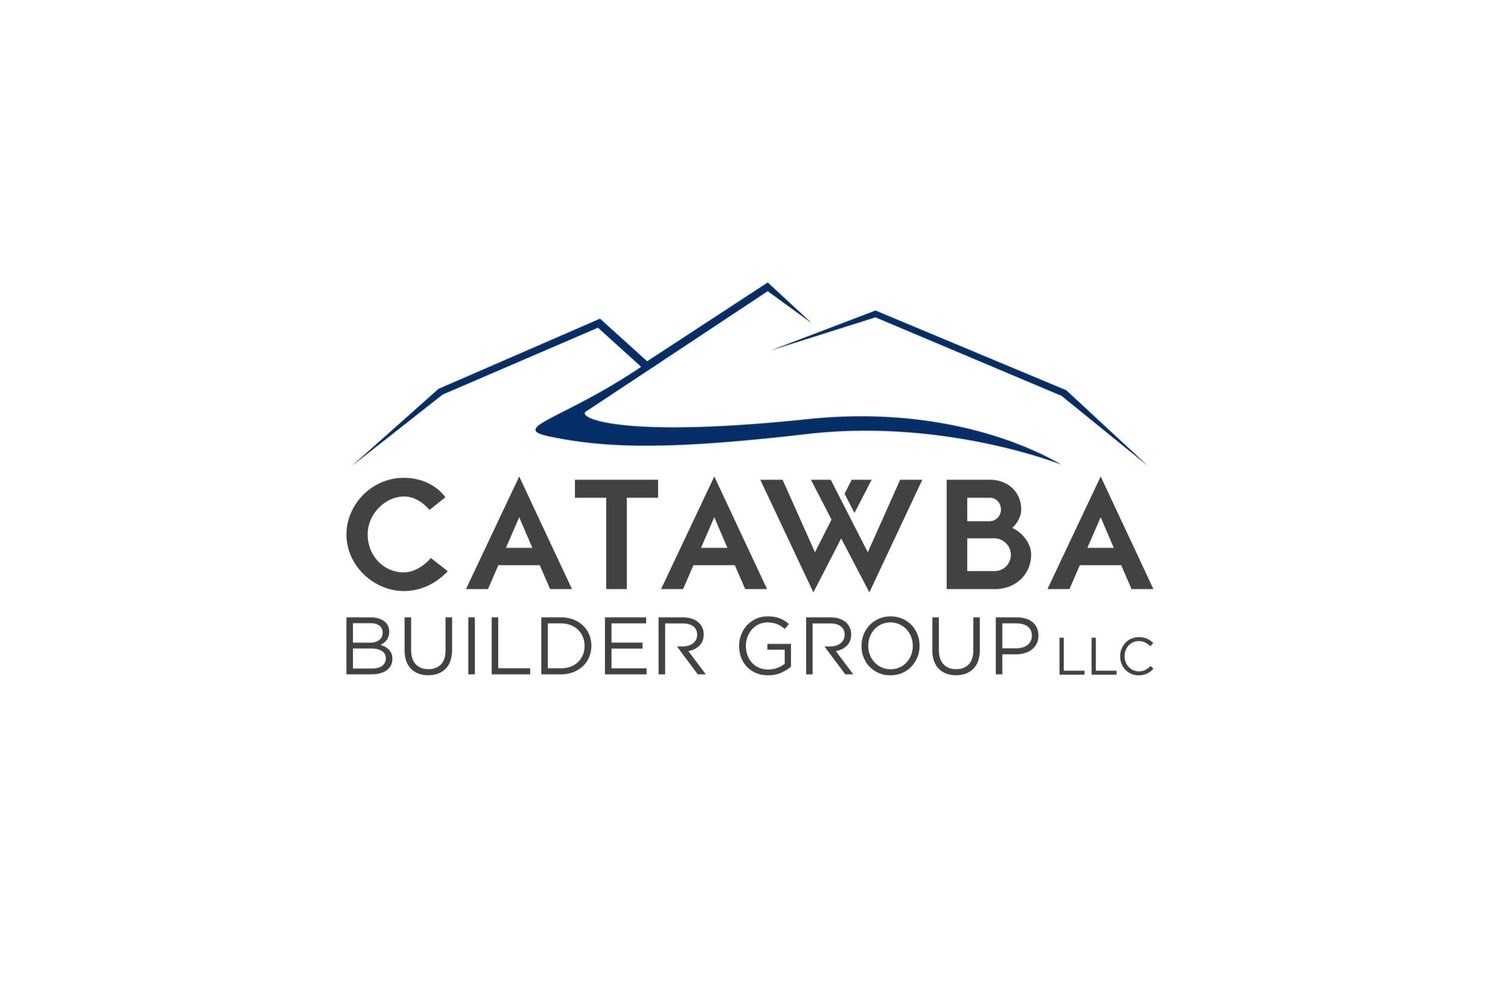 Catawba Builder Group, LLC